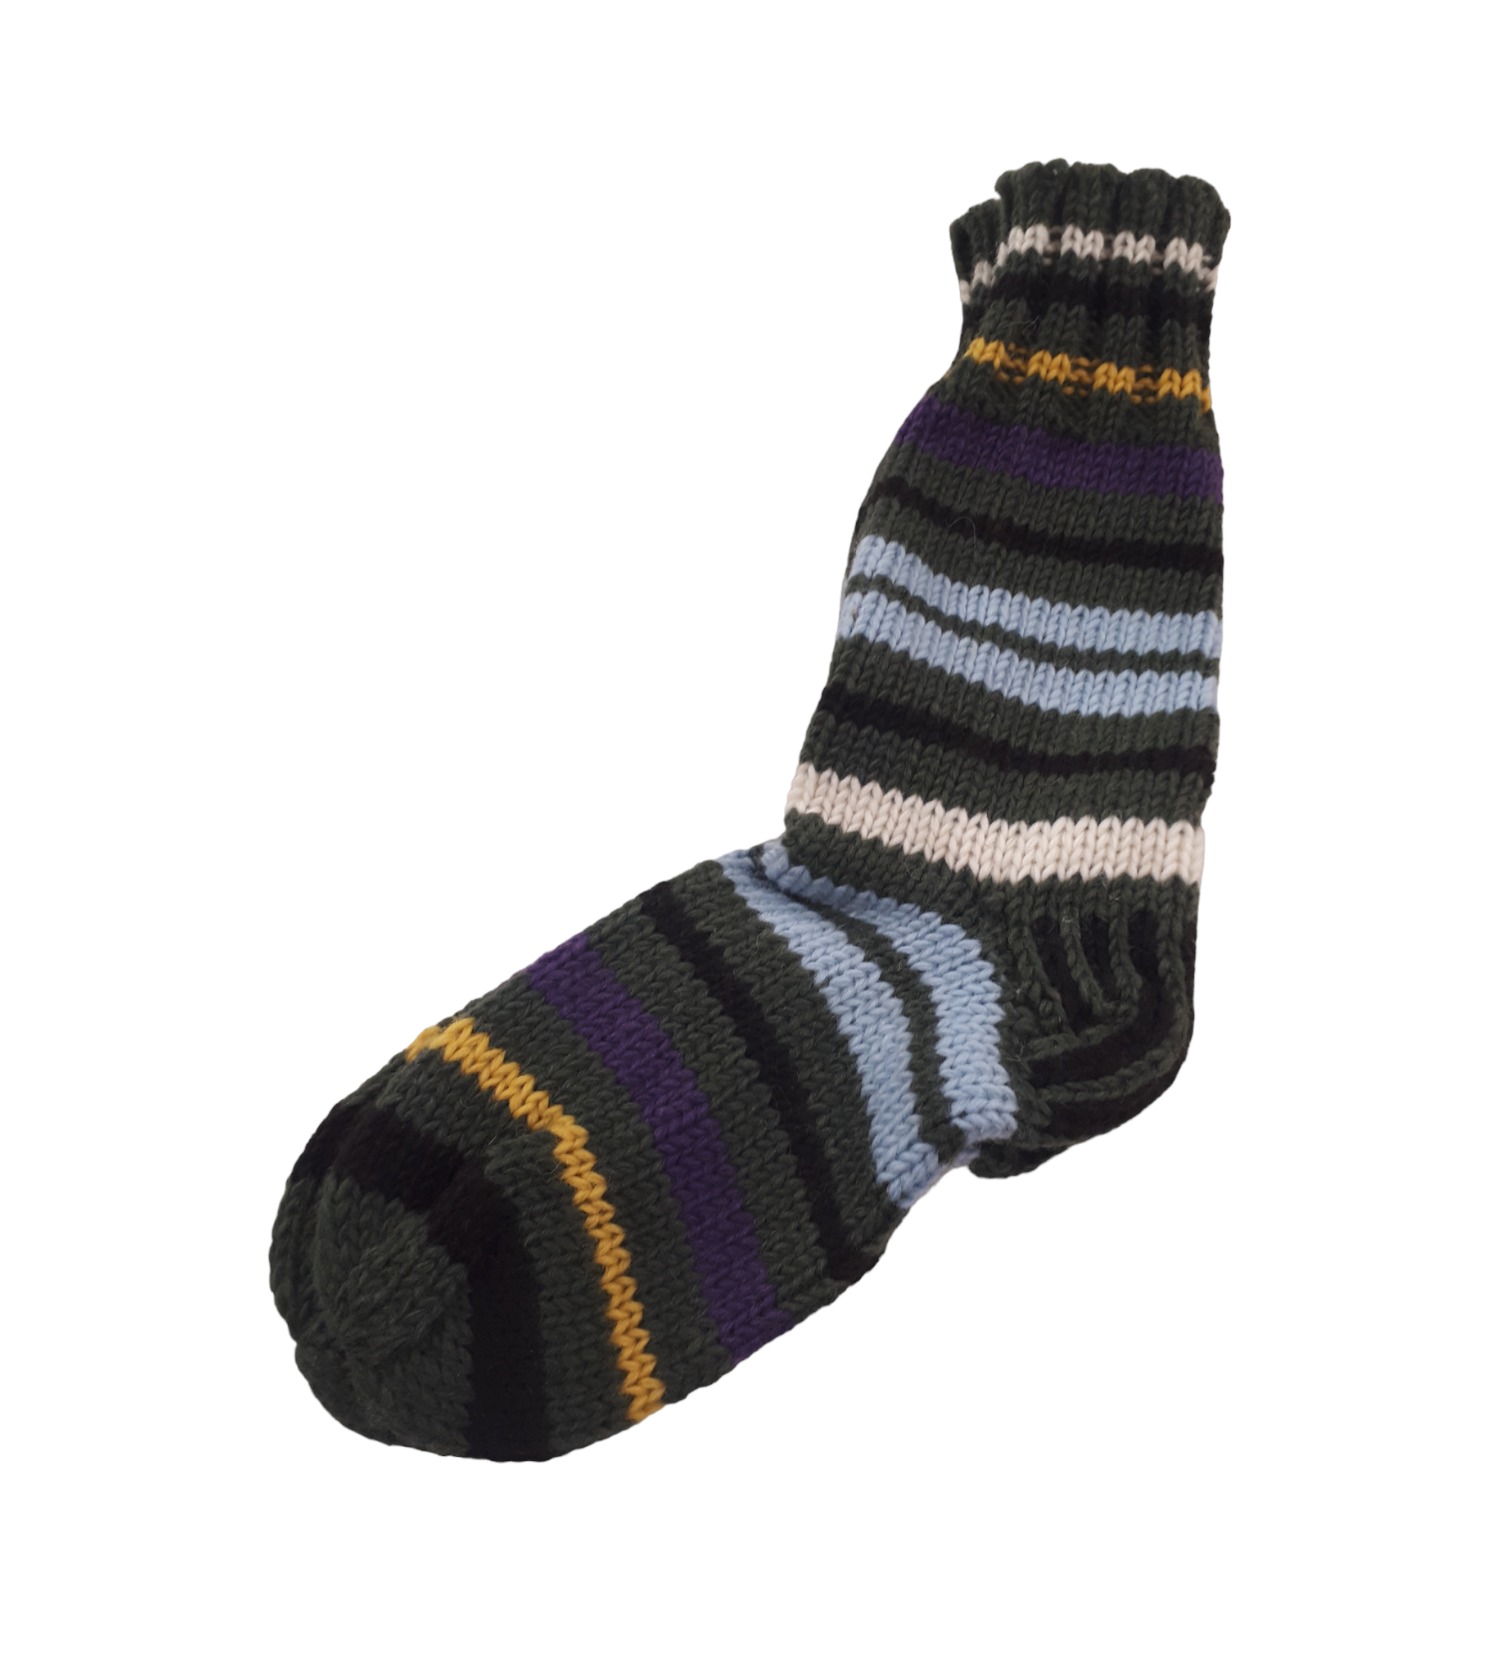 Hand knit wool socks, Nepal - Village Goods